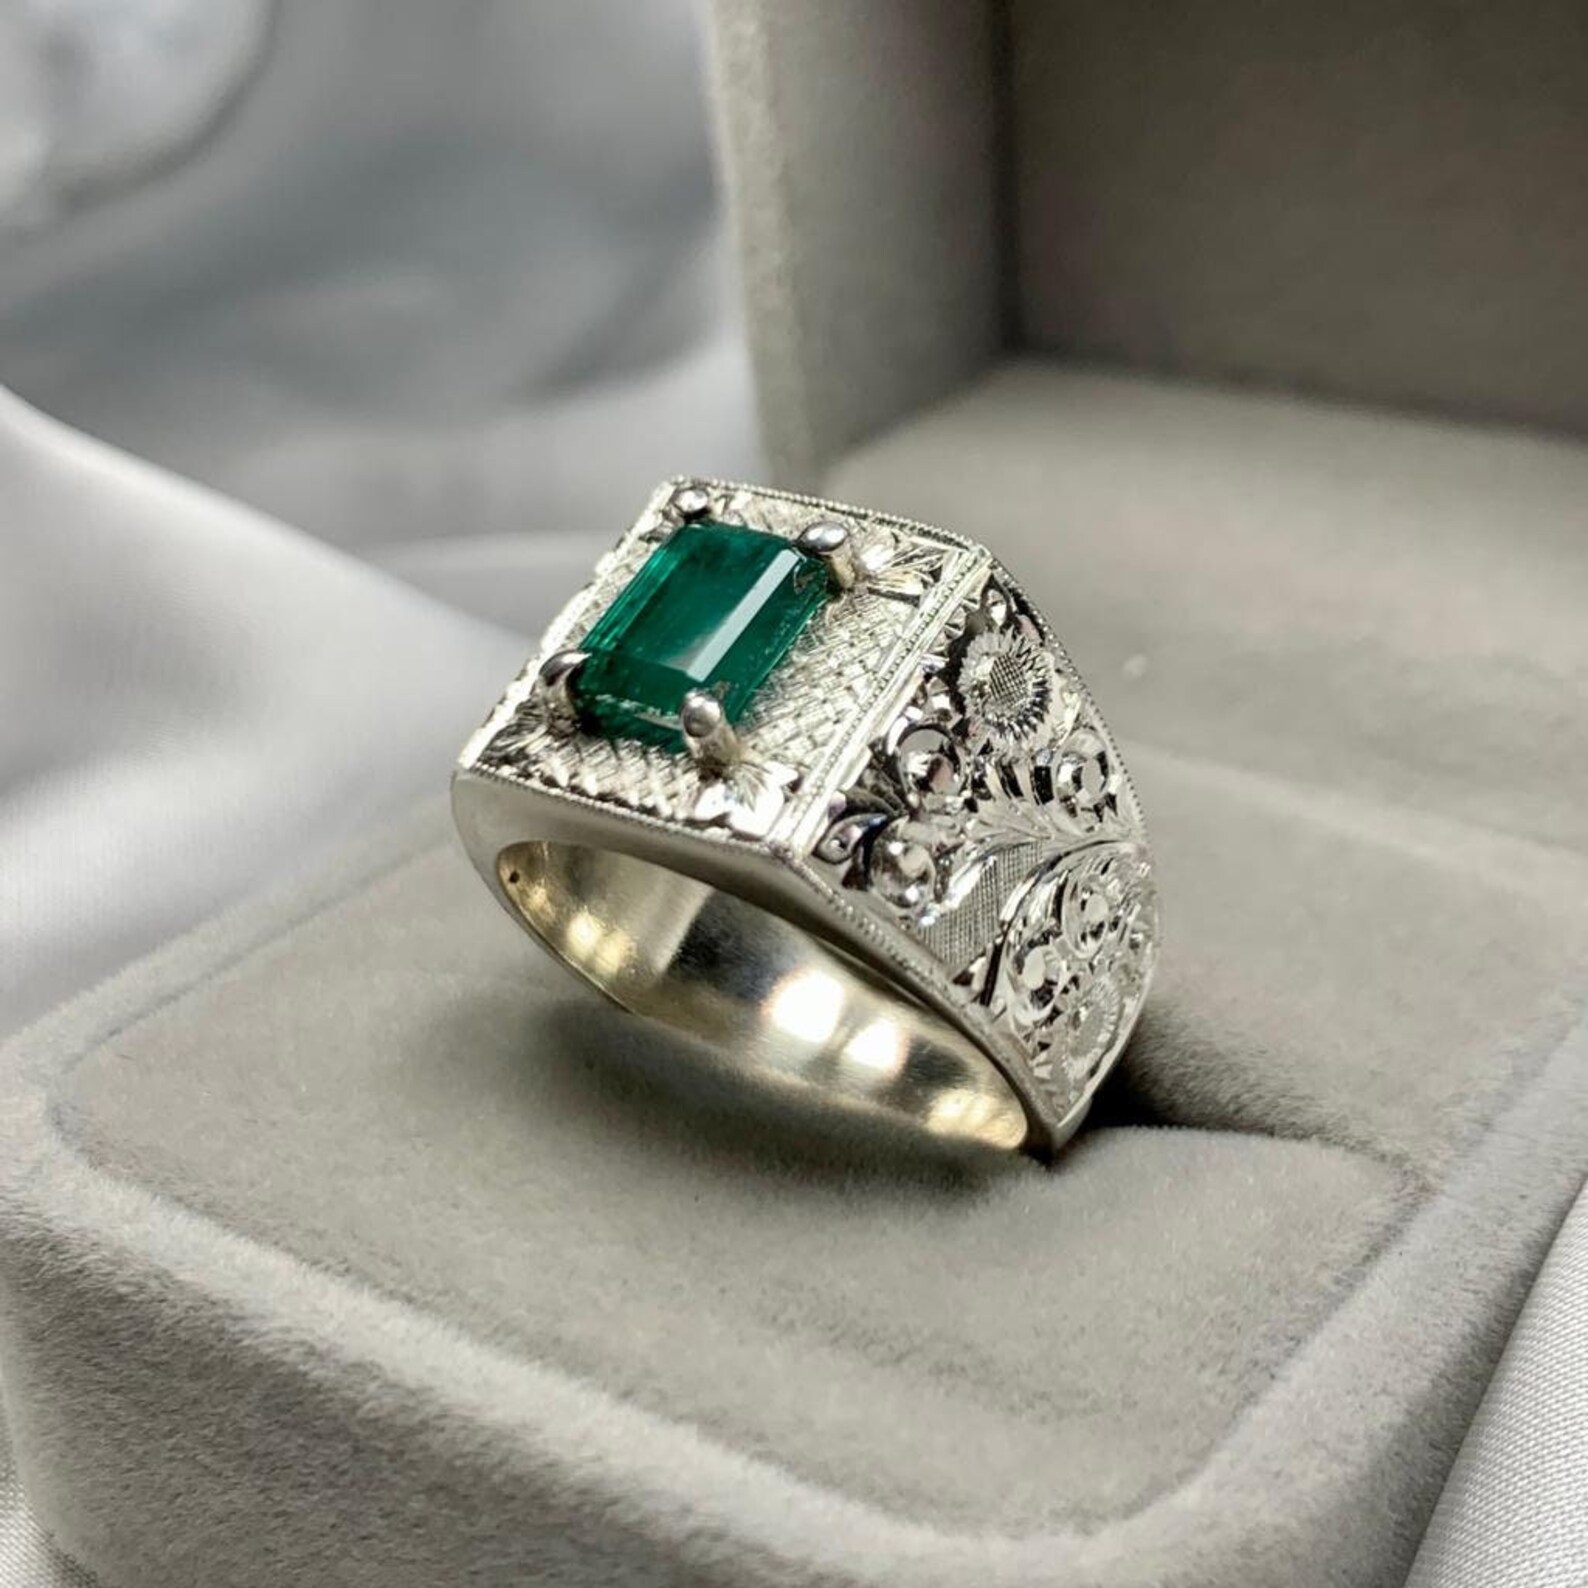 Emerald Panna Ring Best Sale - www.puzzlewood.net 1696103315